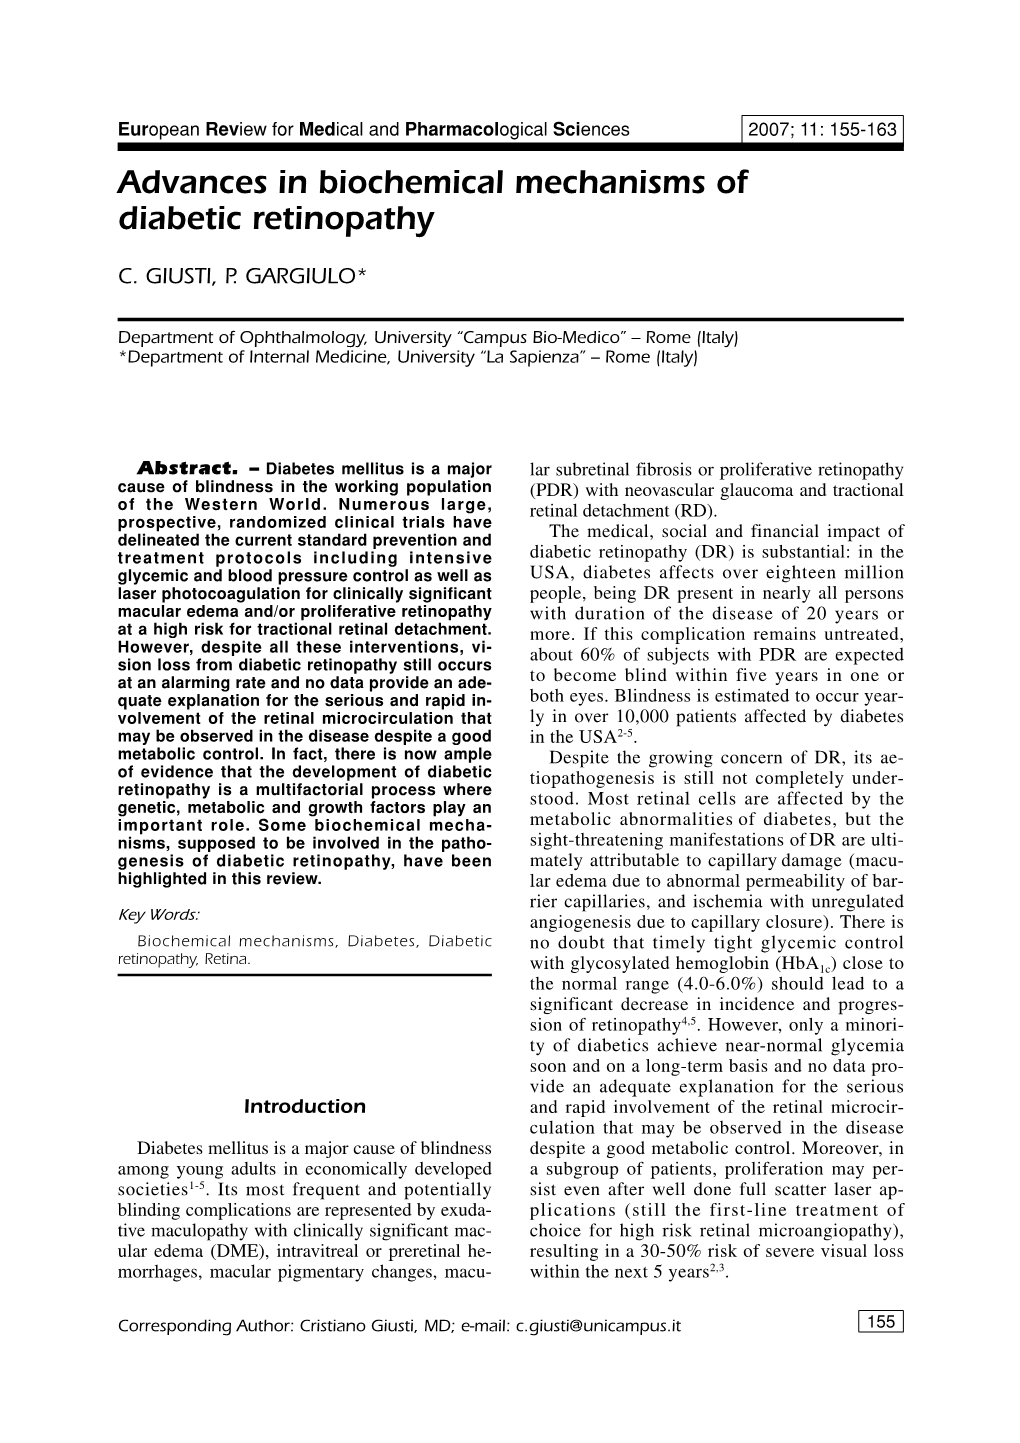 Advances in Biochemical Mechanisms of Diabetic Retinopathy